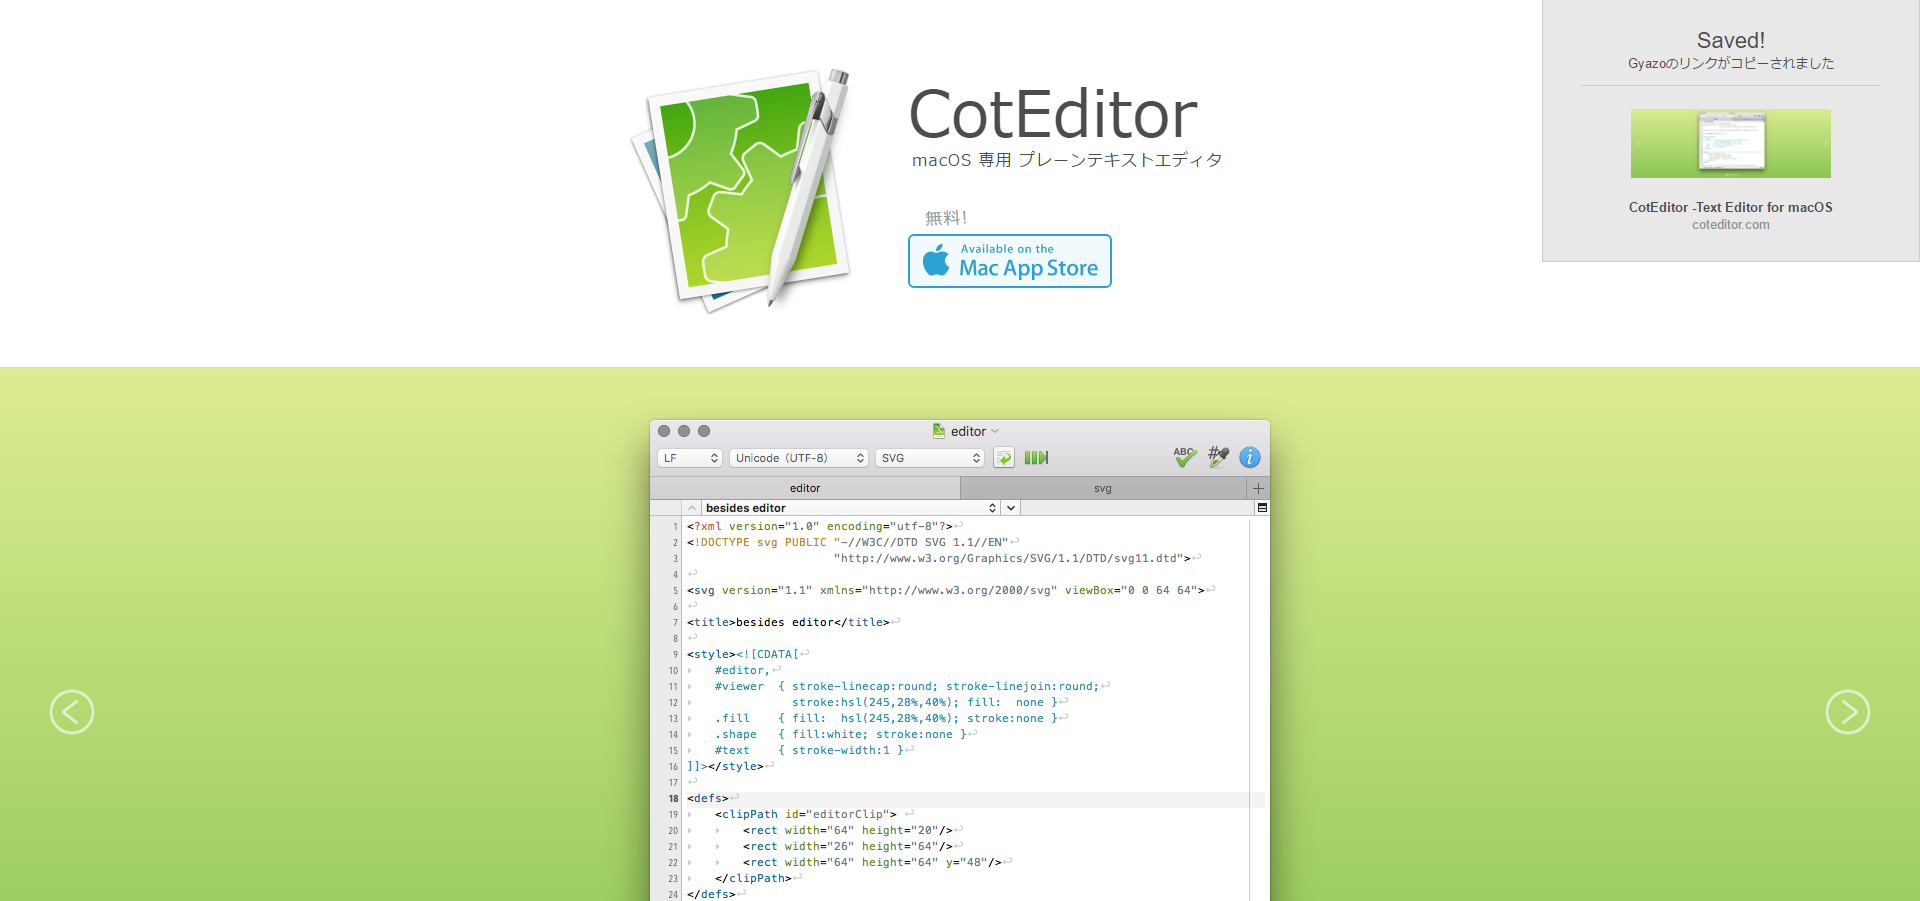 「CotEditor」のサイト